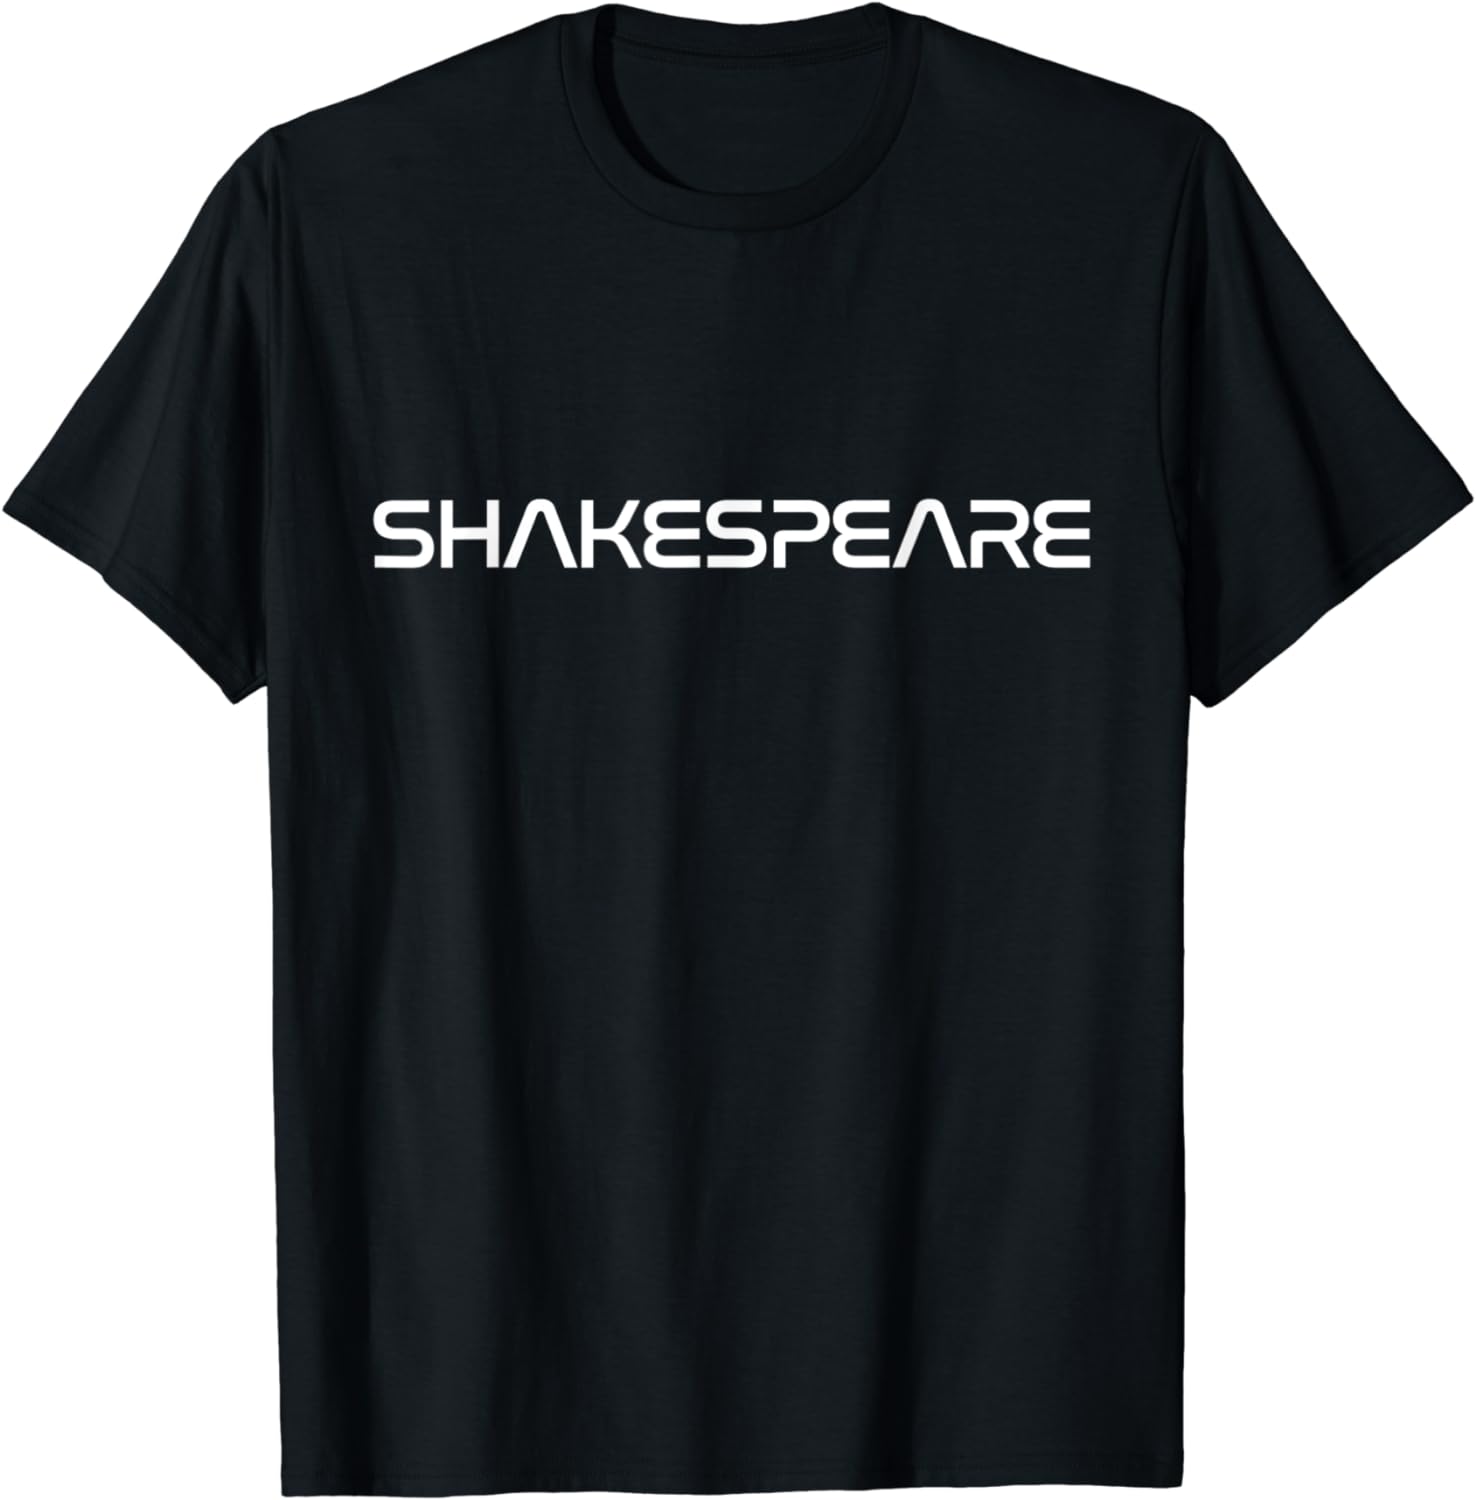 Shakespeare in Space Merchandise